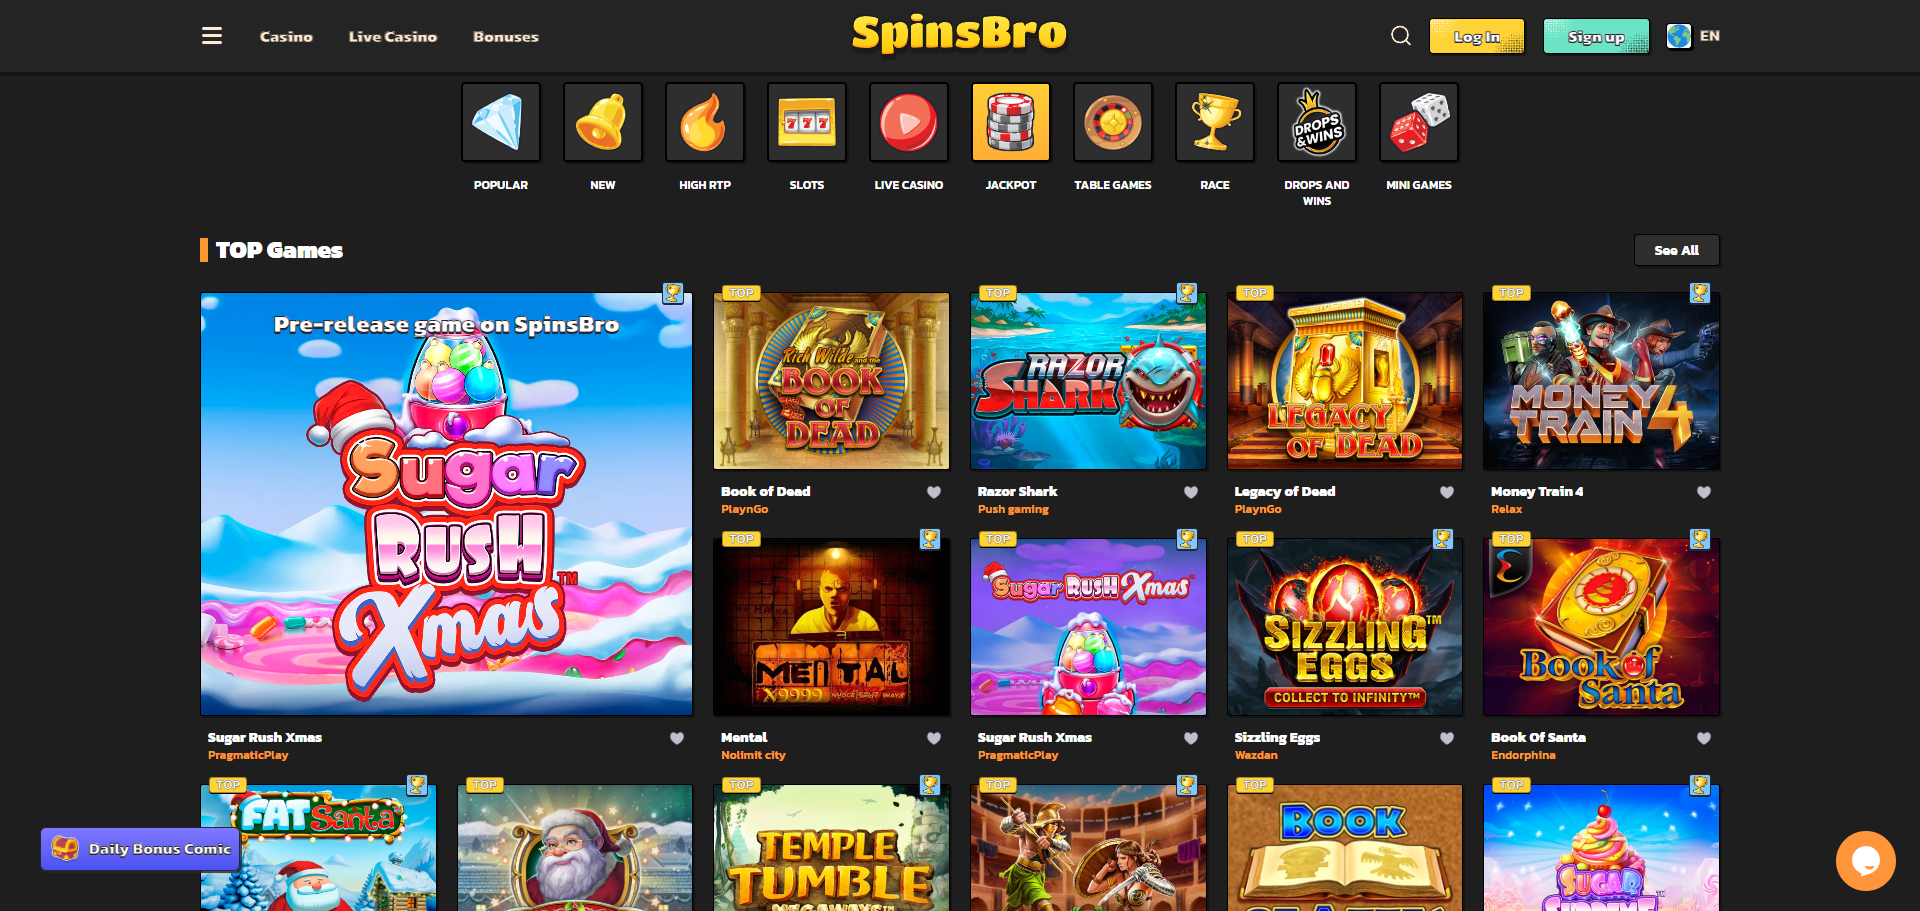 Spinsbro Casino Games